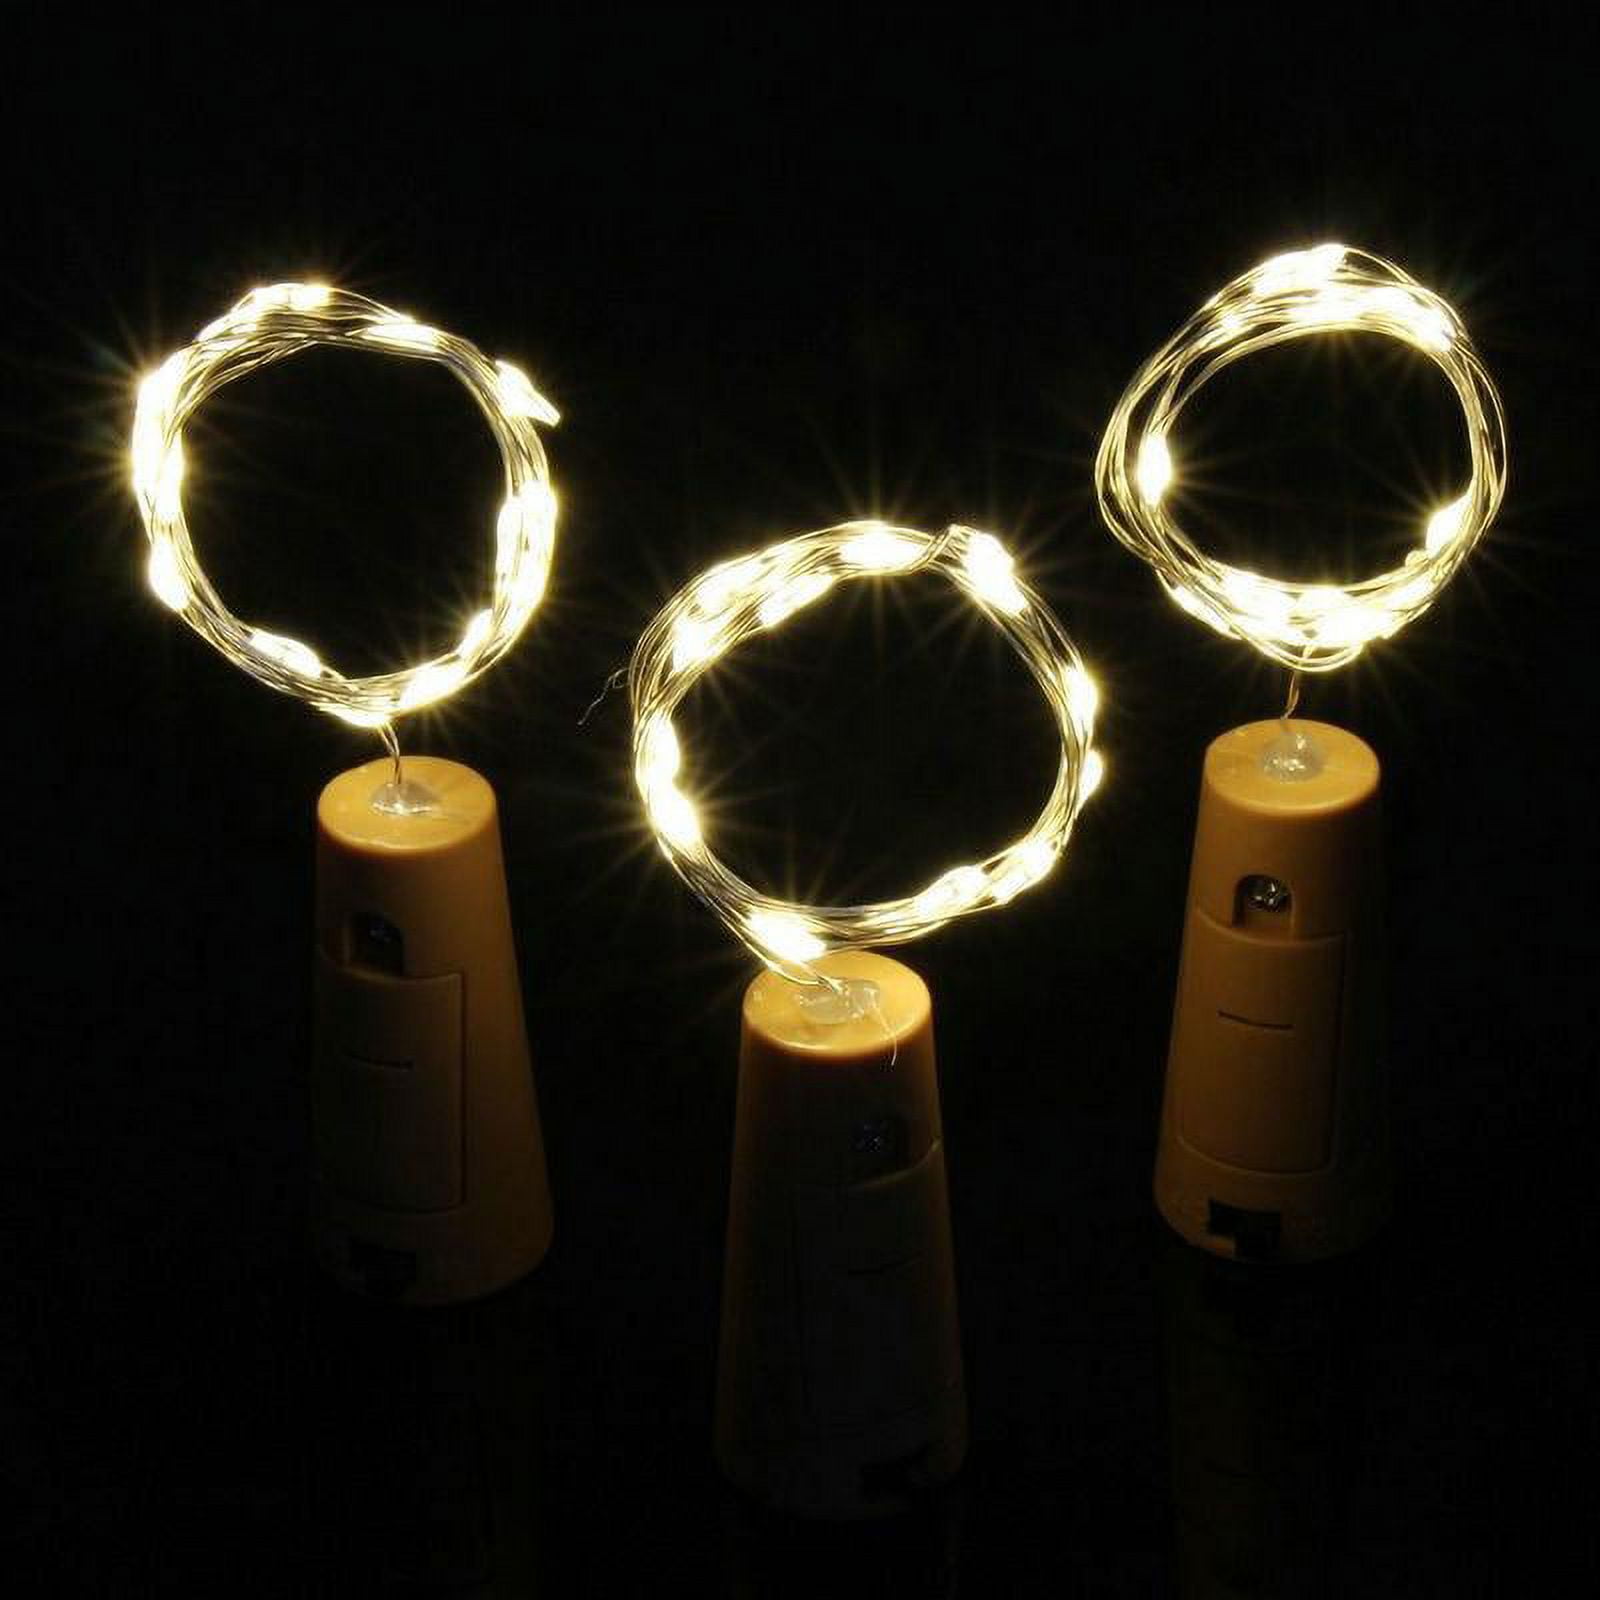 Fantado 20-LED RGB Cork Wine Bottle Lamp Fairy String Light Stopper, 38-Inch by PaperLanternStore